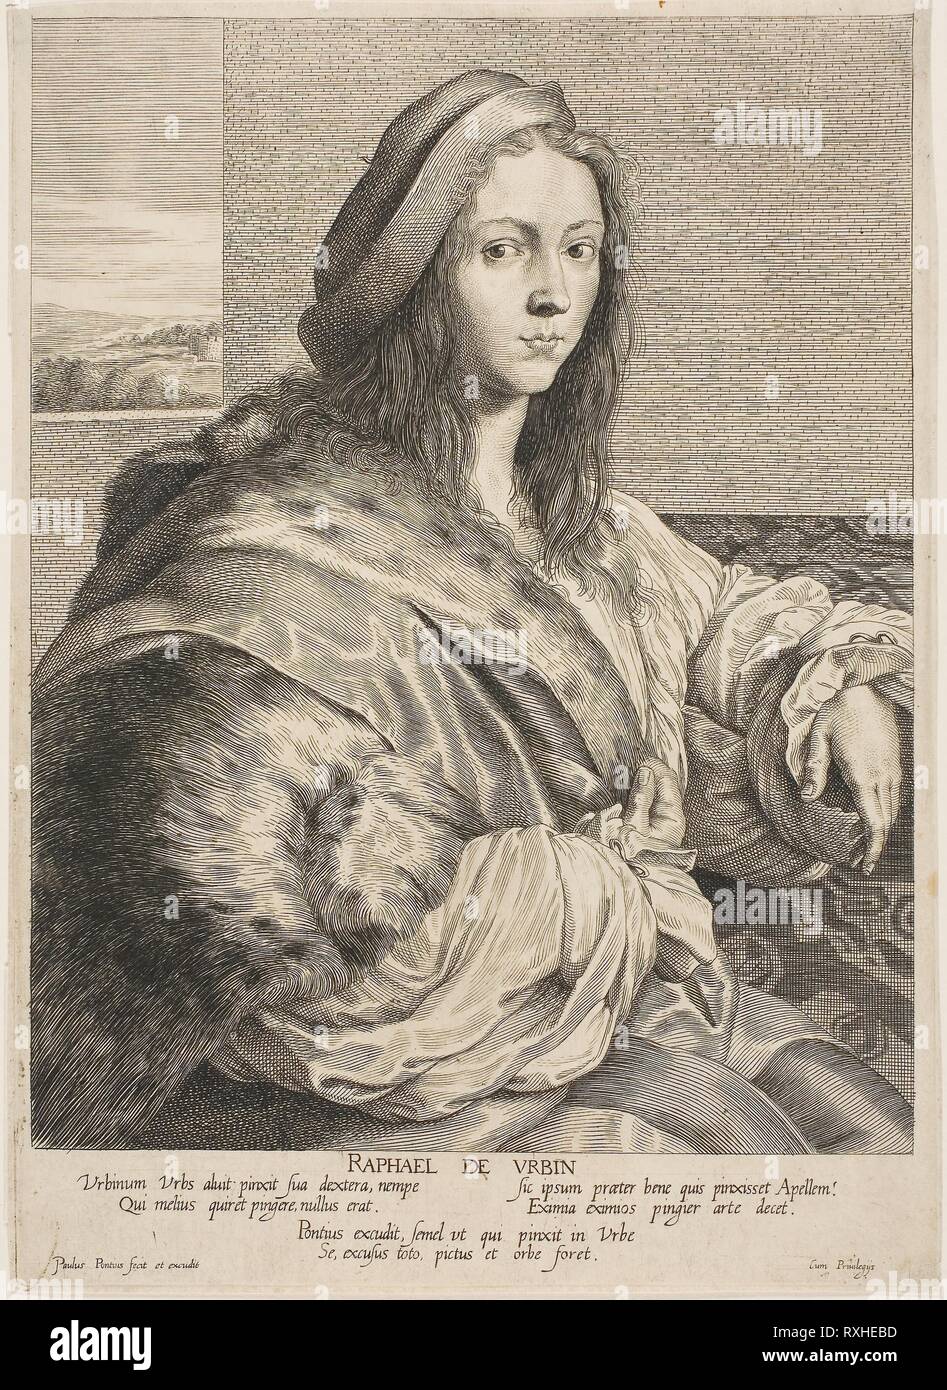 Portrait of Raphael. Paul Pontius; Flemish, 1603-1658. Date: 1623-1658. Dimensions: 253 × 179 mm. Engraving in black on paper. Origin: Flanders. Museum: The Chicago Art Institute. Stock Photo